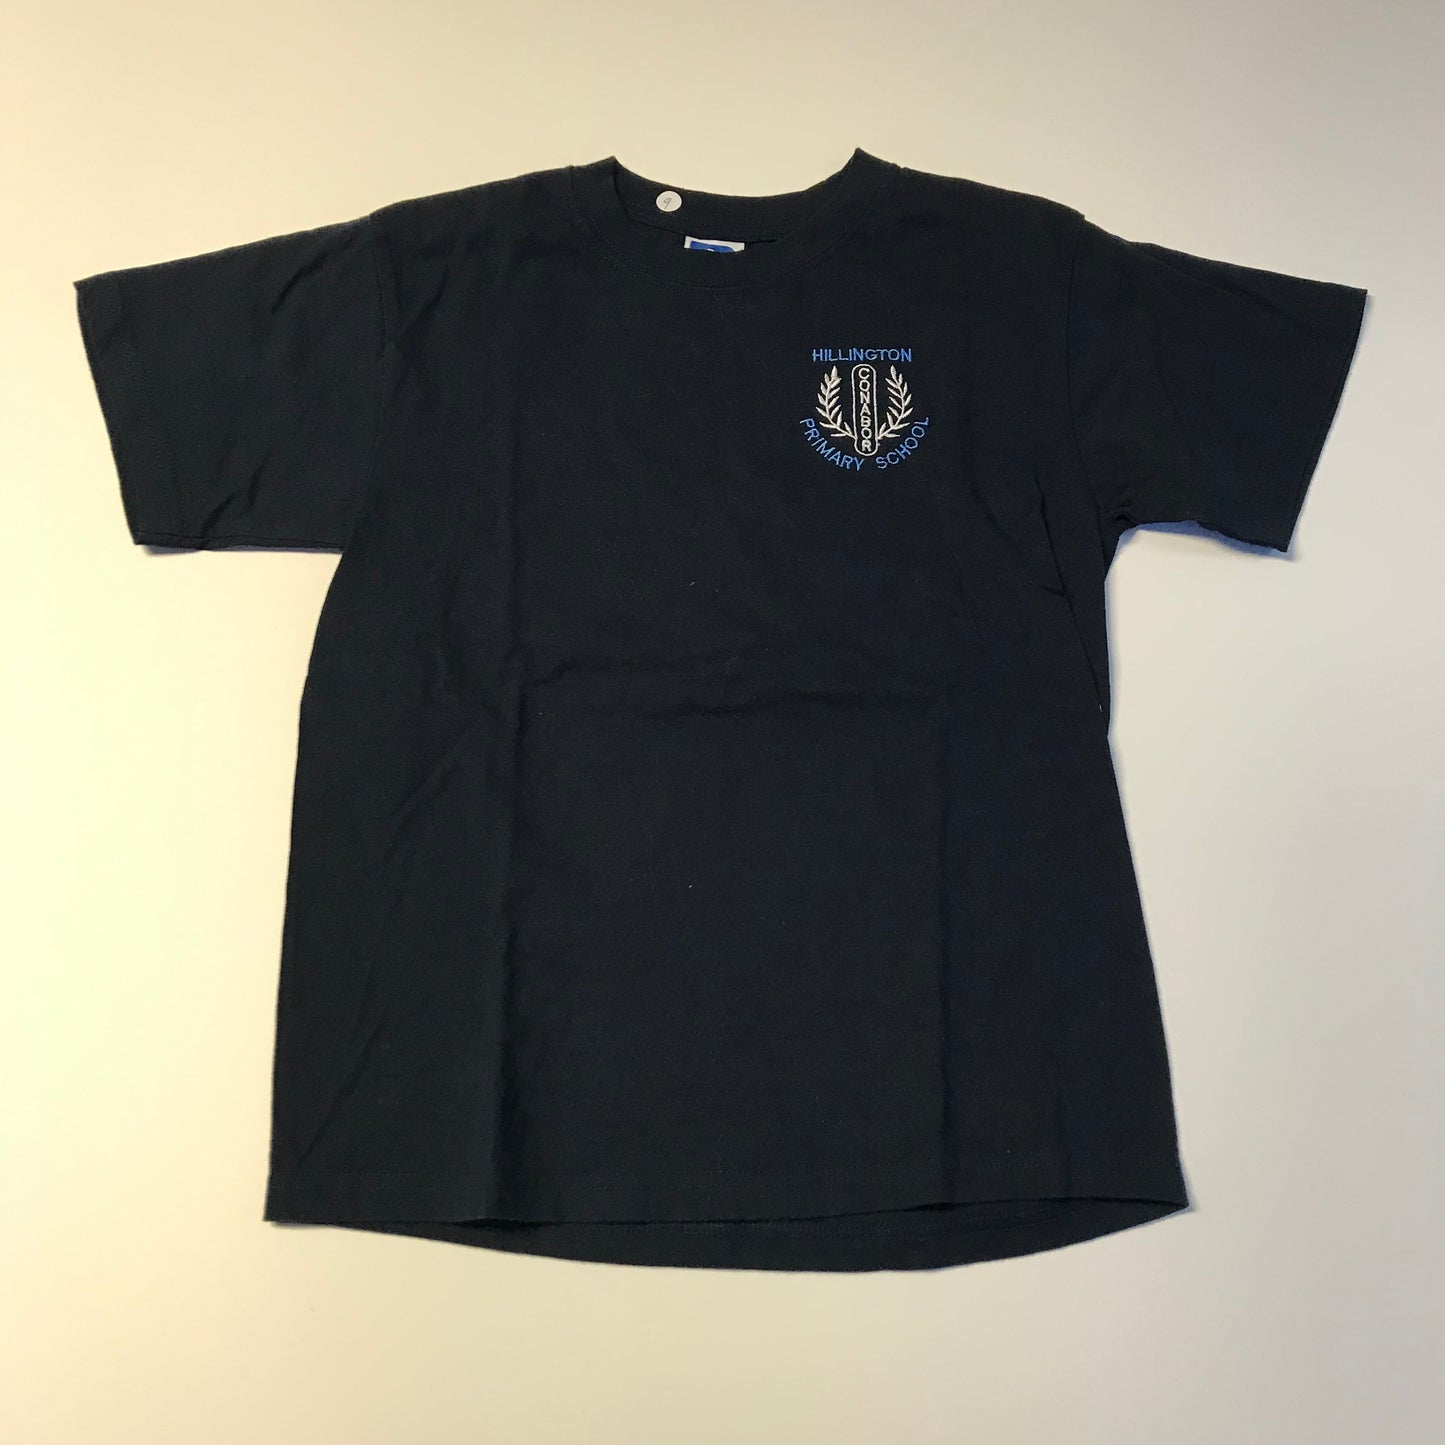 Hillington Primary Navy Blue Gym T-shirt